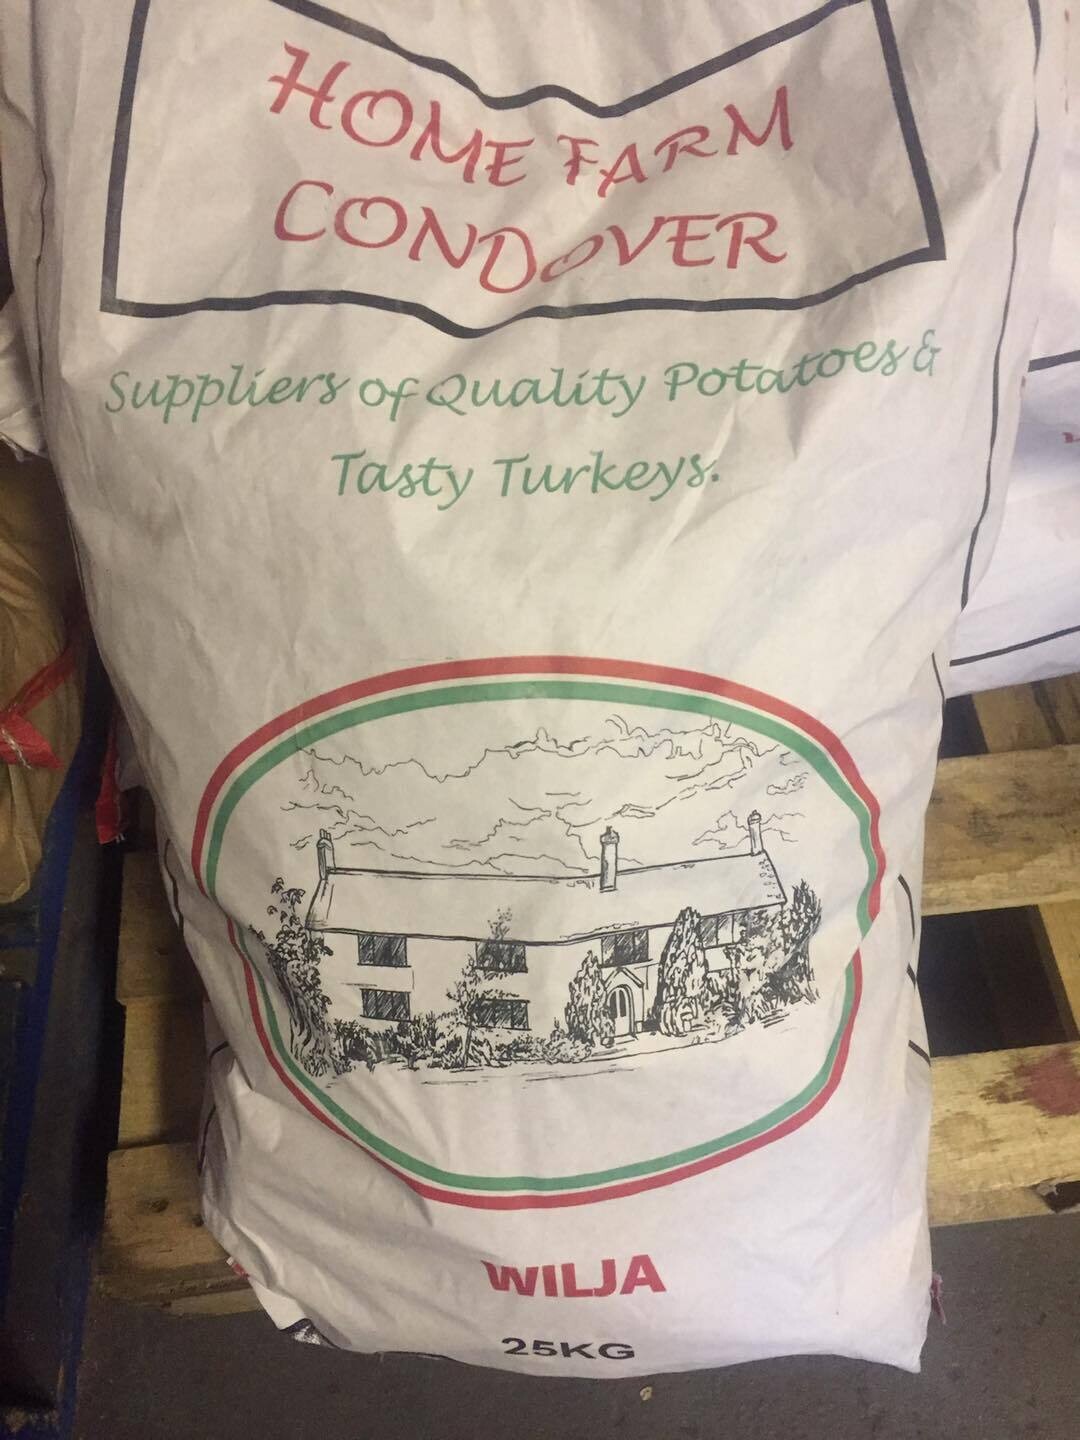 Potatoes Condover Wilja 25kg Sack-